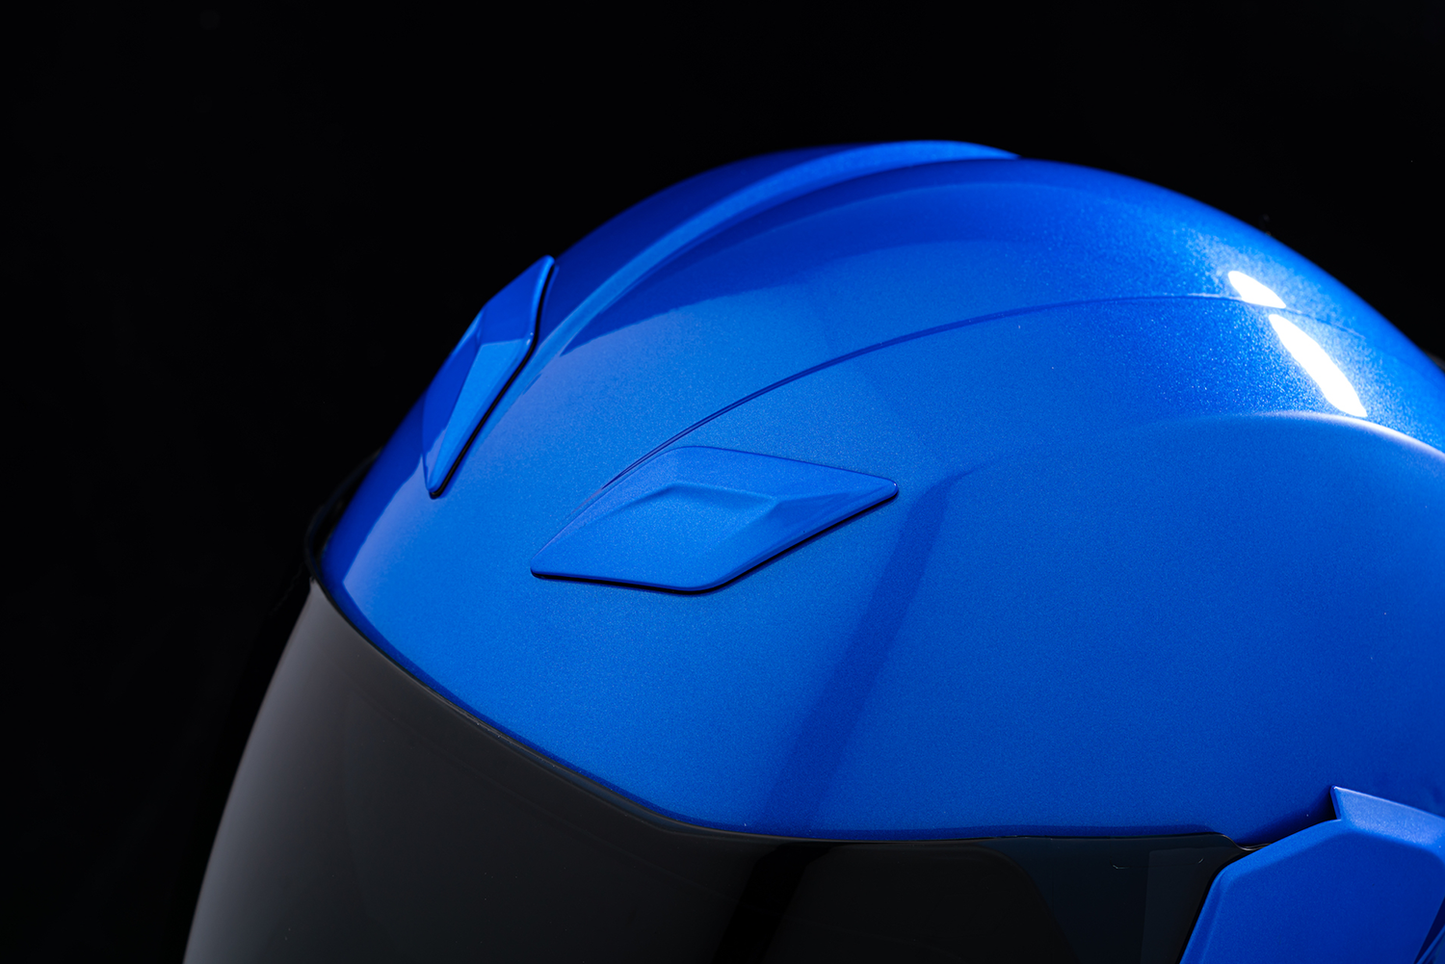 ICON Airflite™ Helmet - Jewel - MIPS® - Blue - 3XL 0101-14196